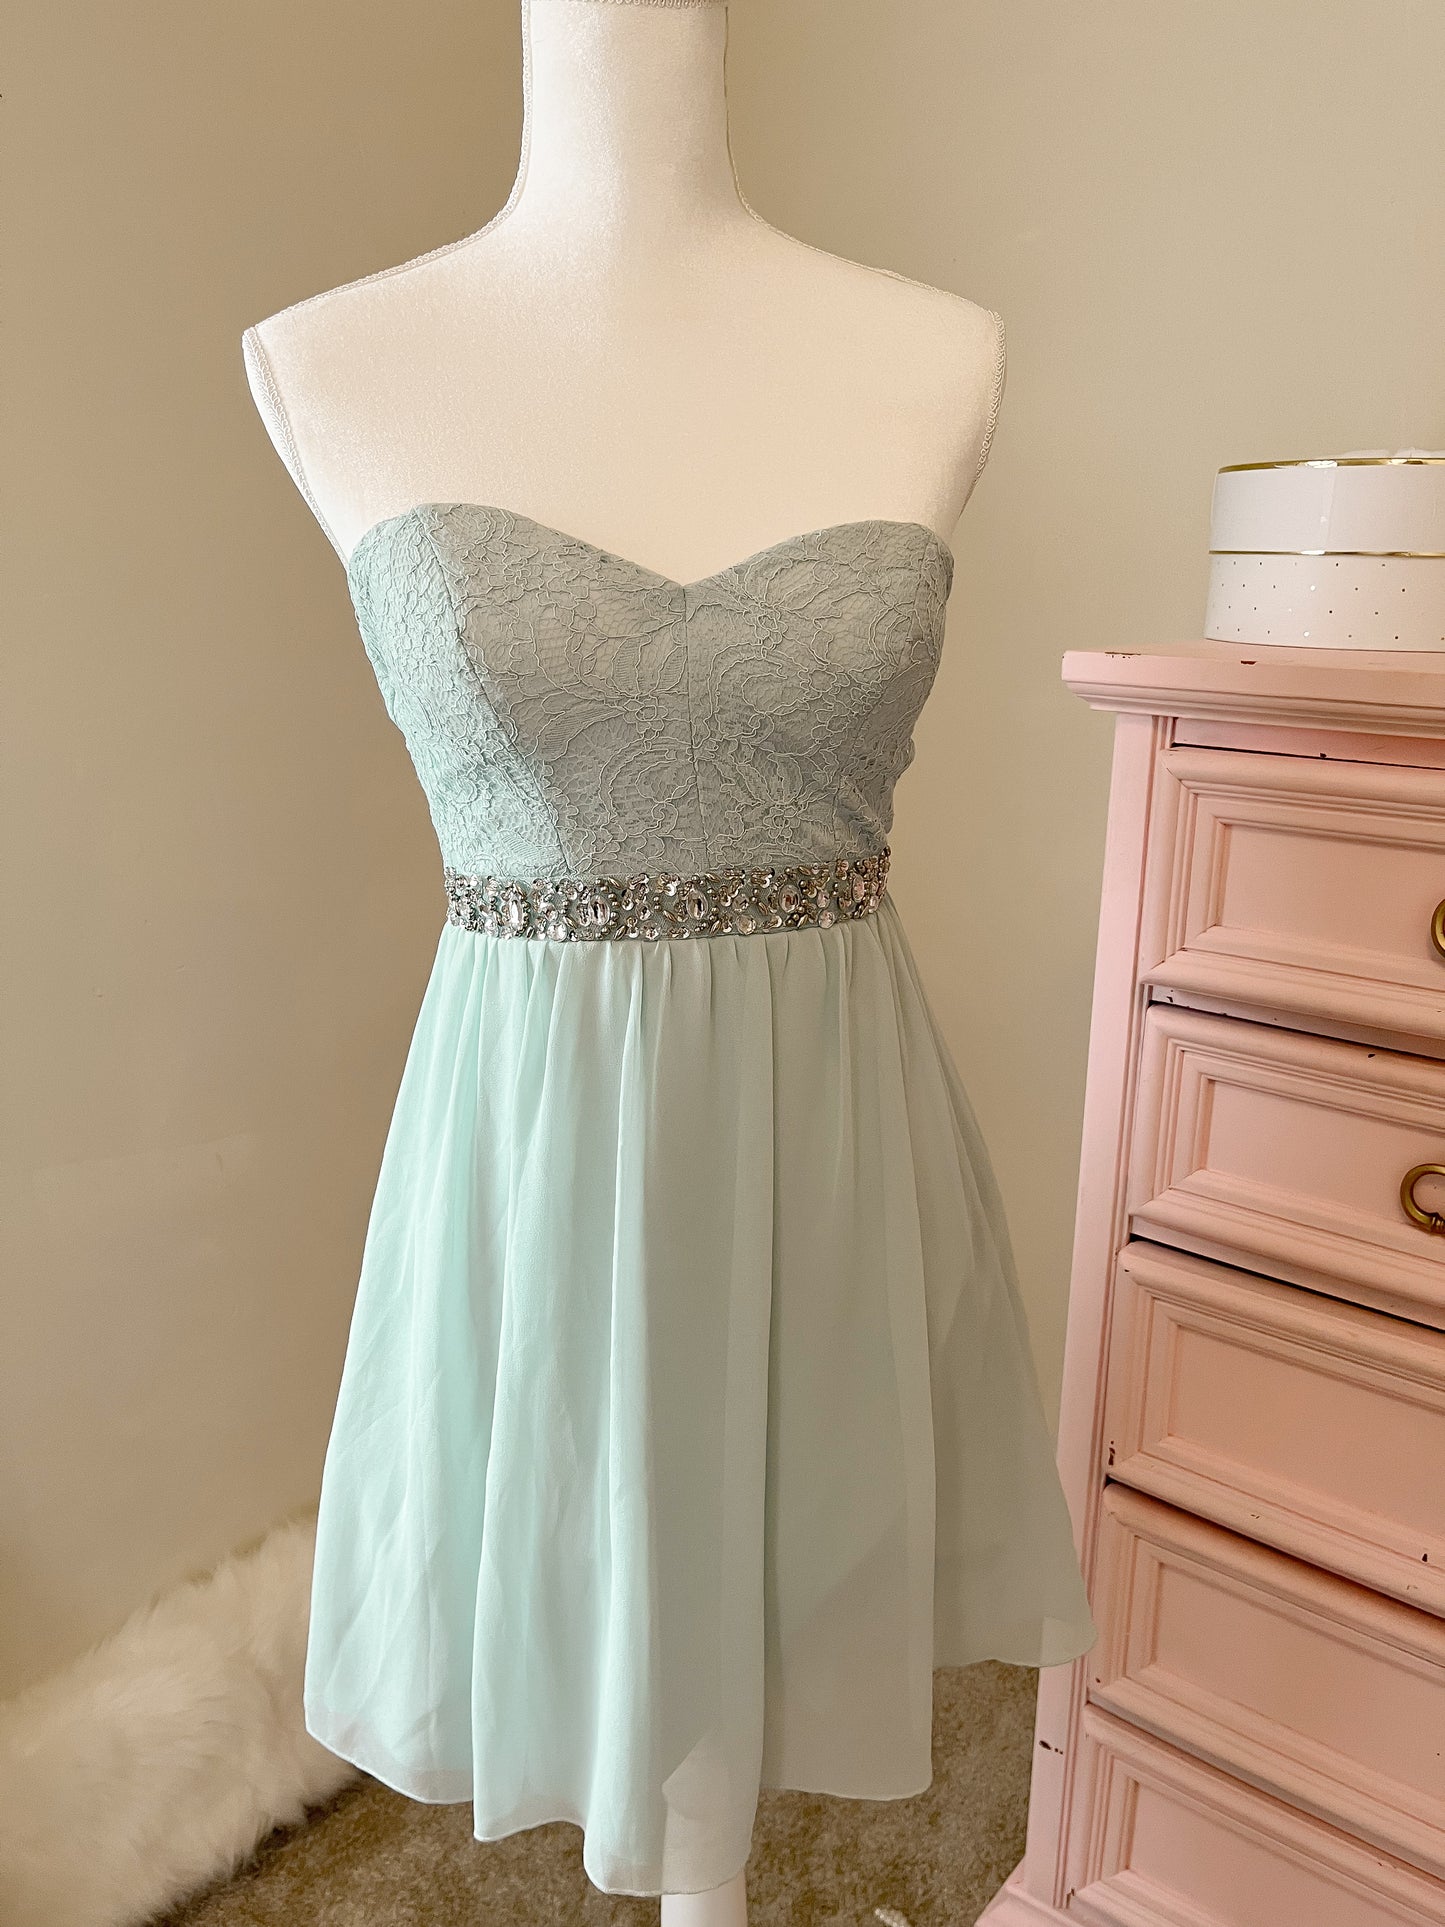 Tiffany Blue Lace & Crystal Princess Dress size small USA 3